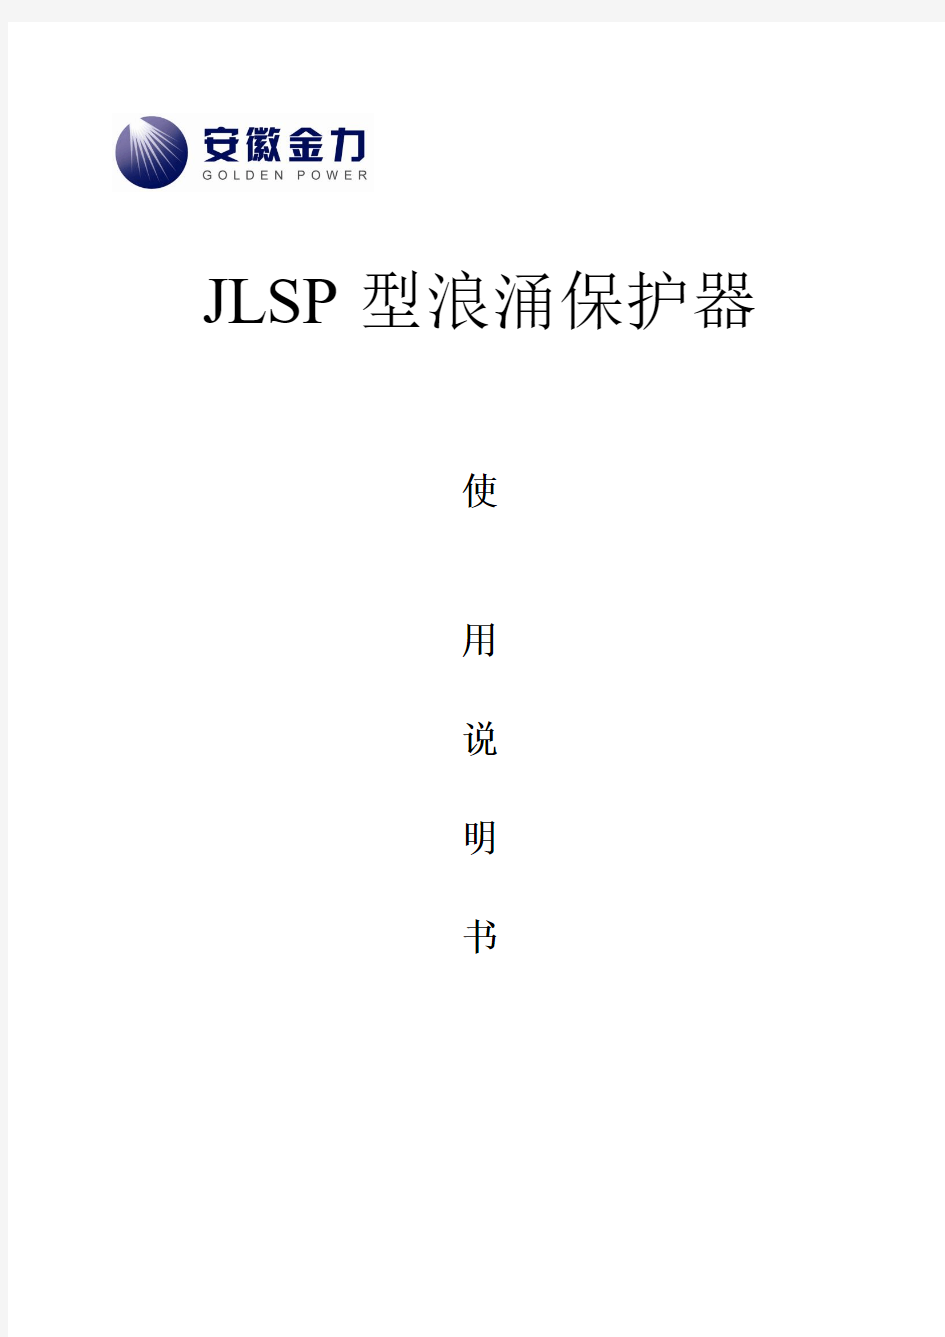 JLSP型浪涌保护器使用说明书